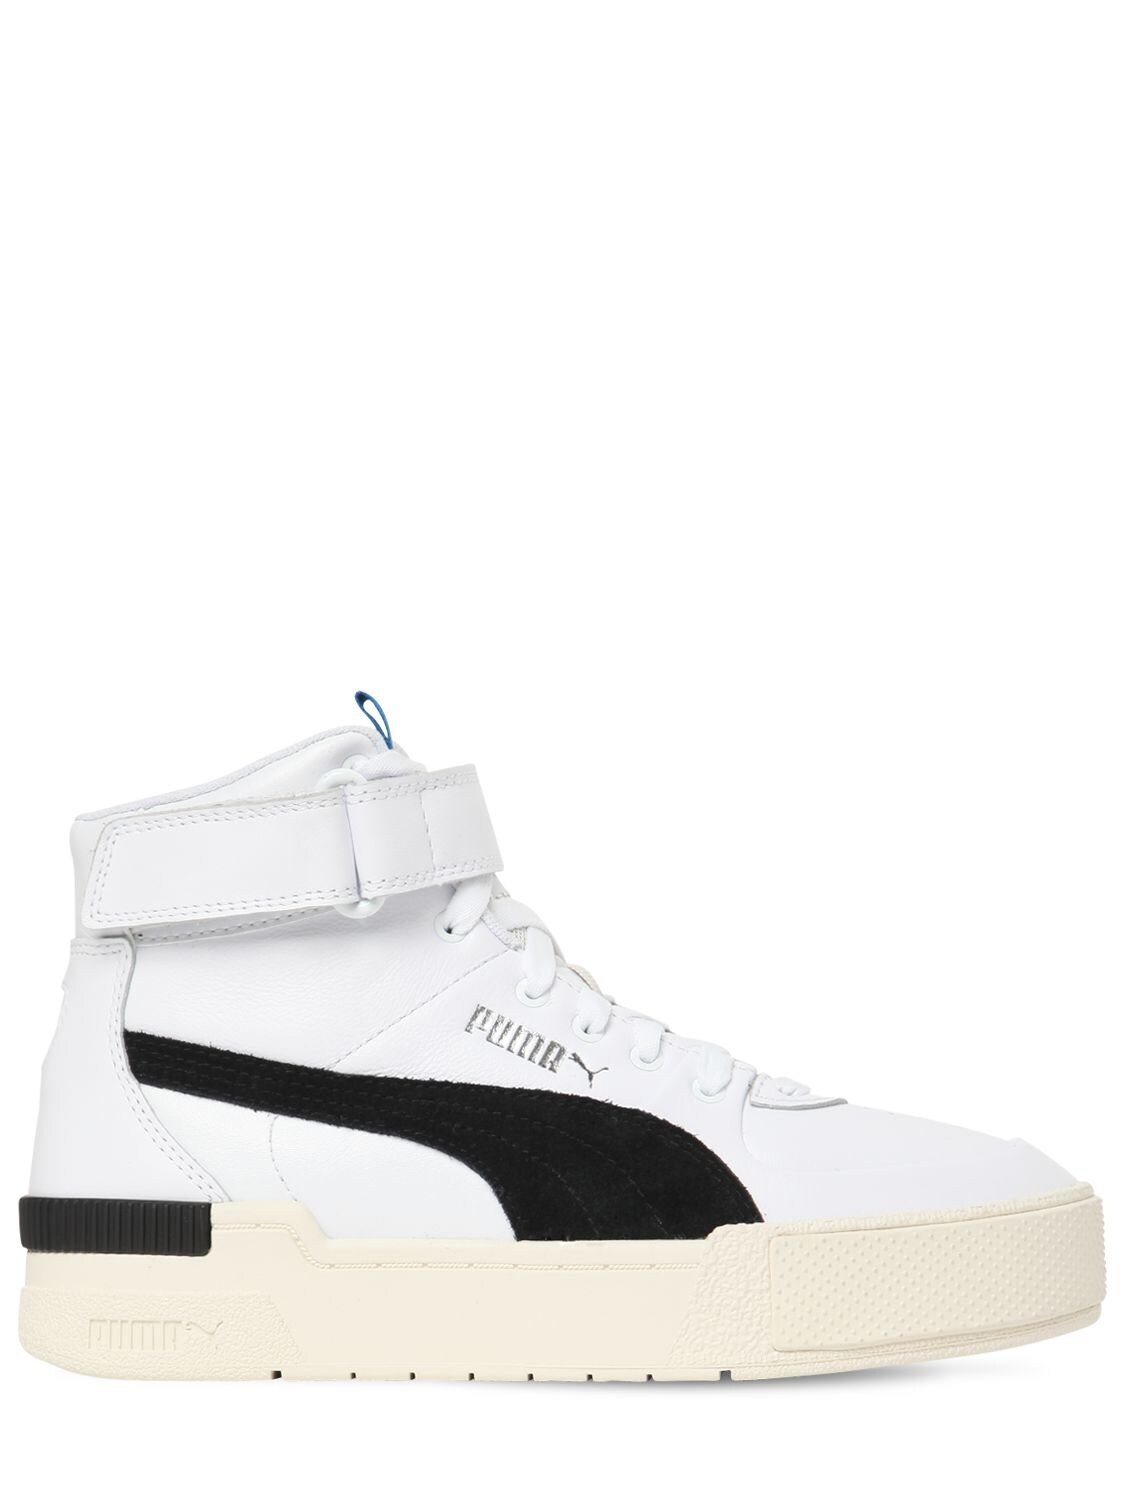 Puma Cali Sport Hi-top sneakers in white and black